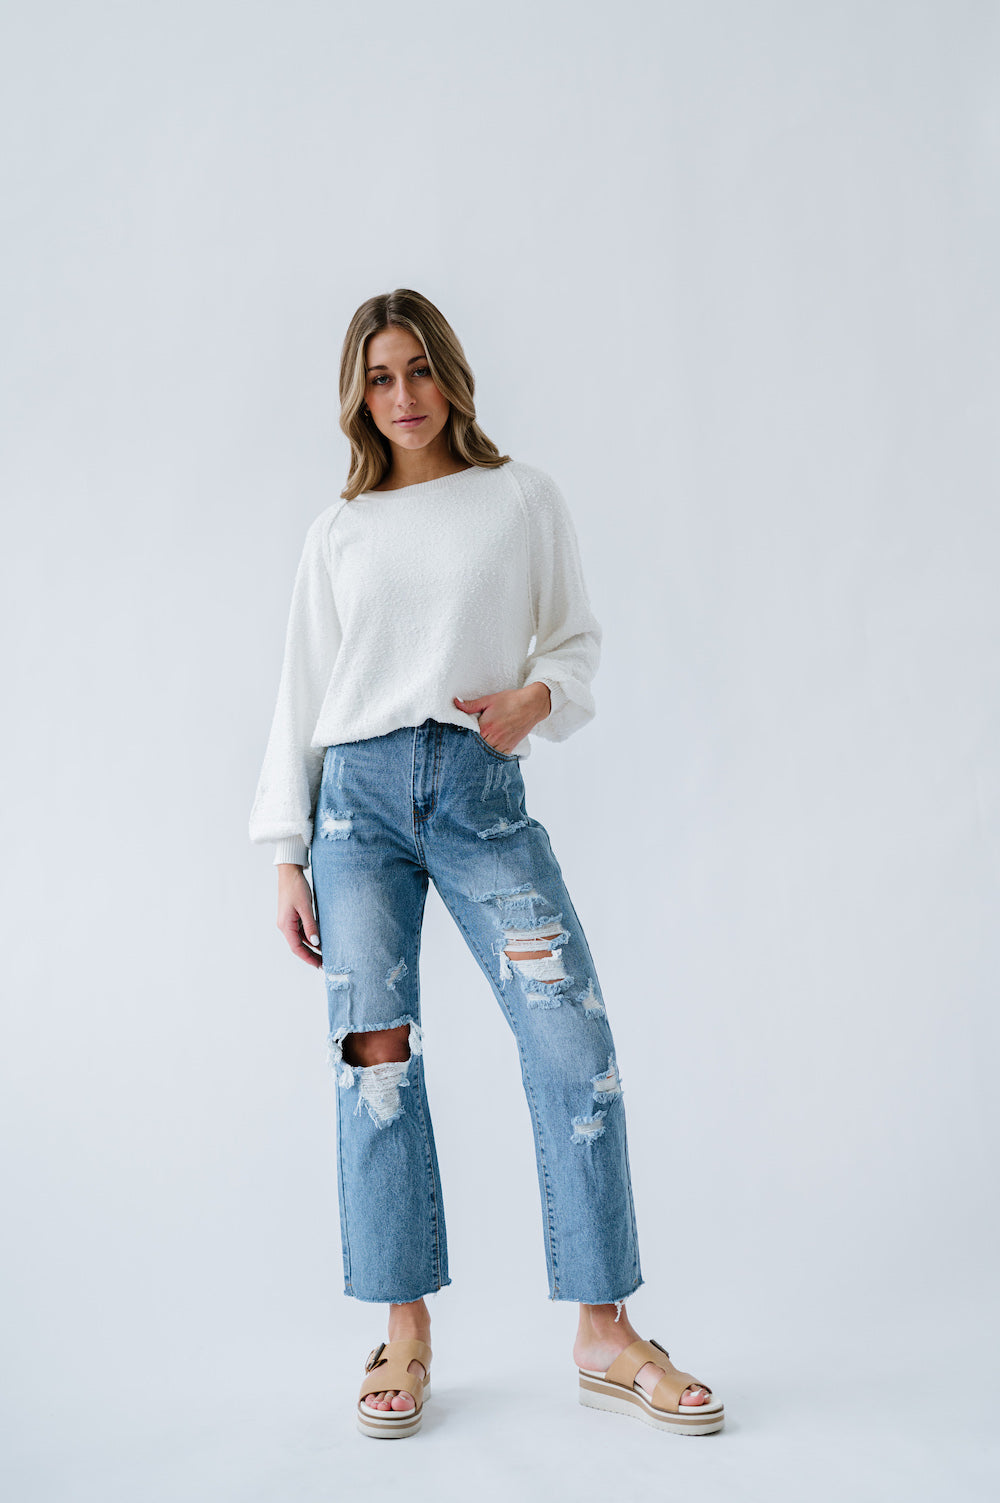 Cotton denim distressed jeans